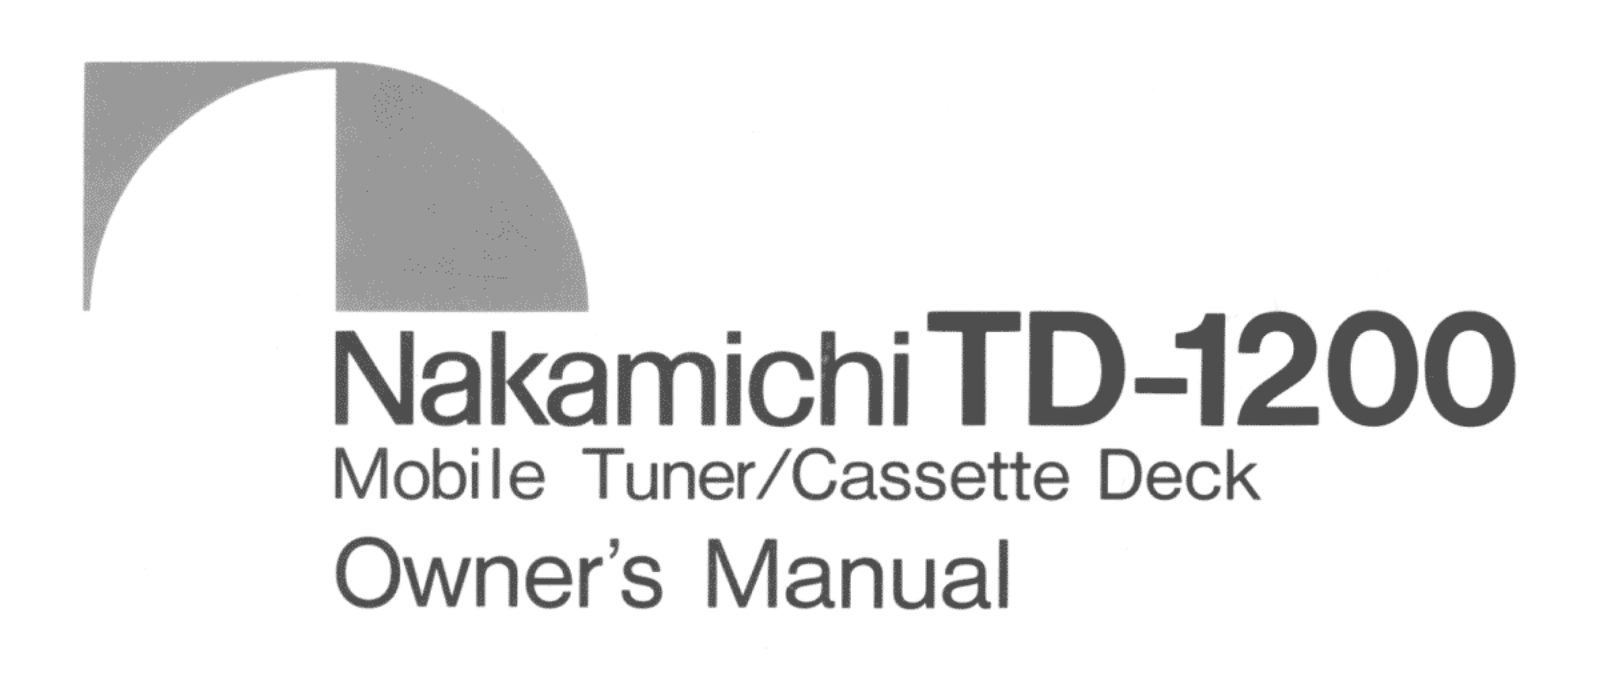 Nakamichi TD-1200 Owners manual